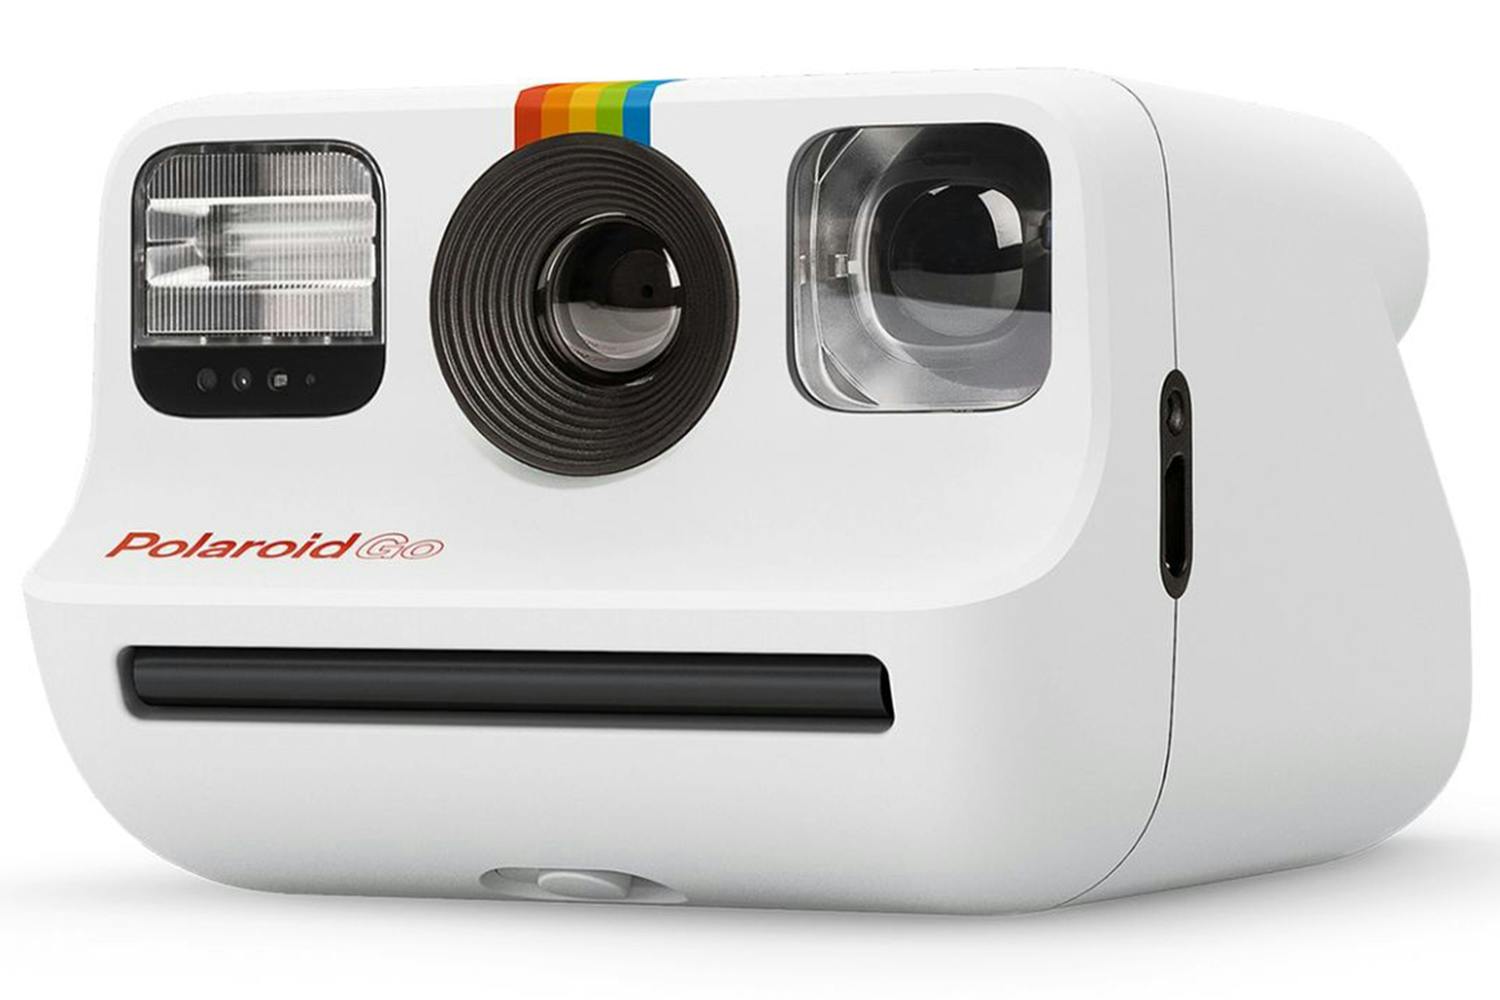 Polaroid Go Instant Camera, White